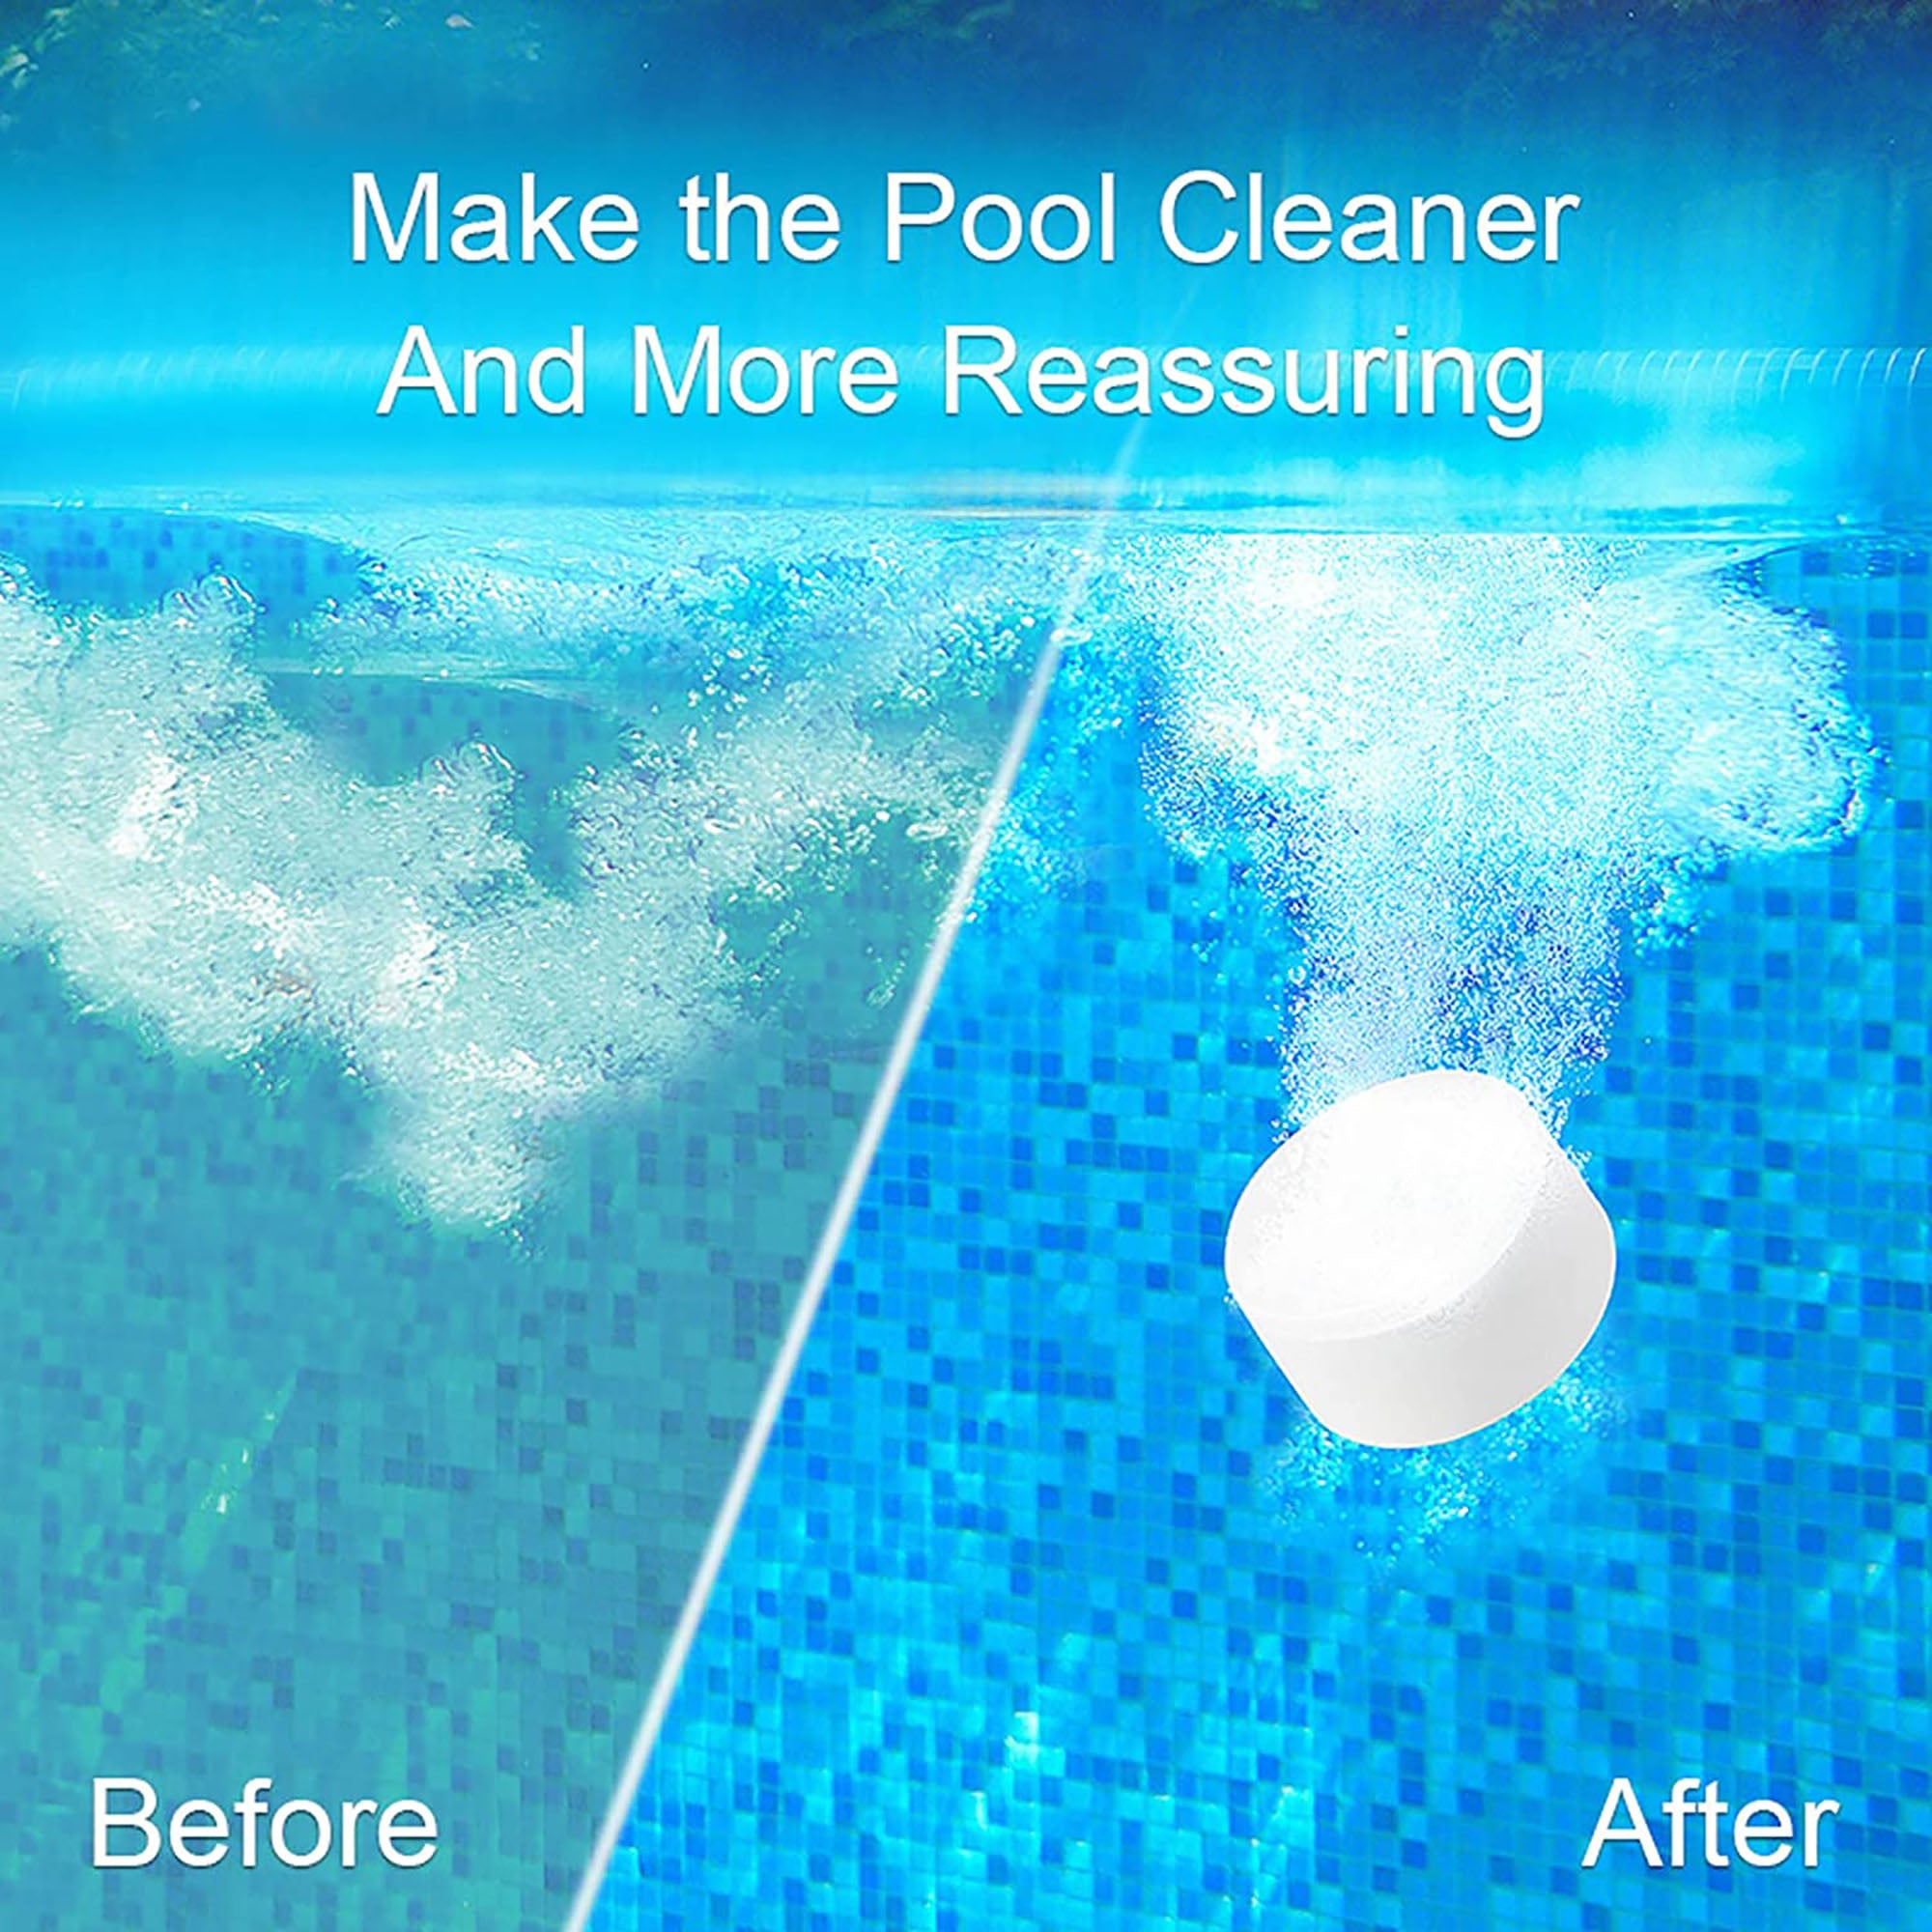 Make the Pool Cleaner